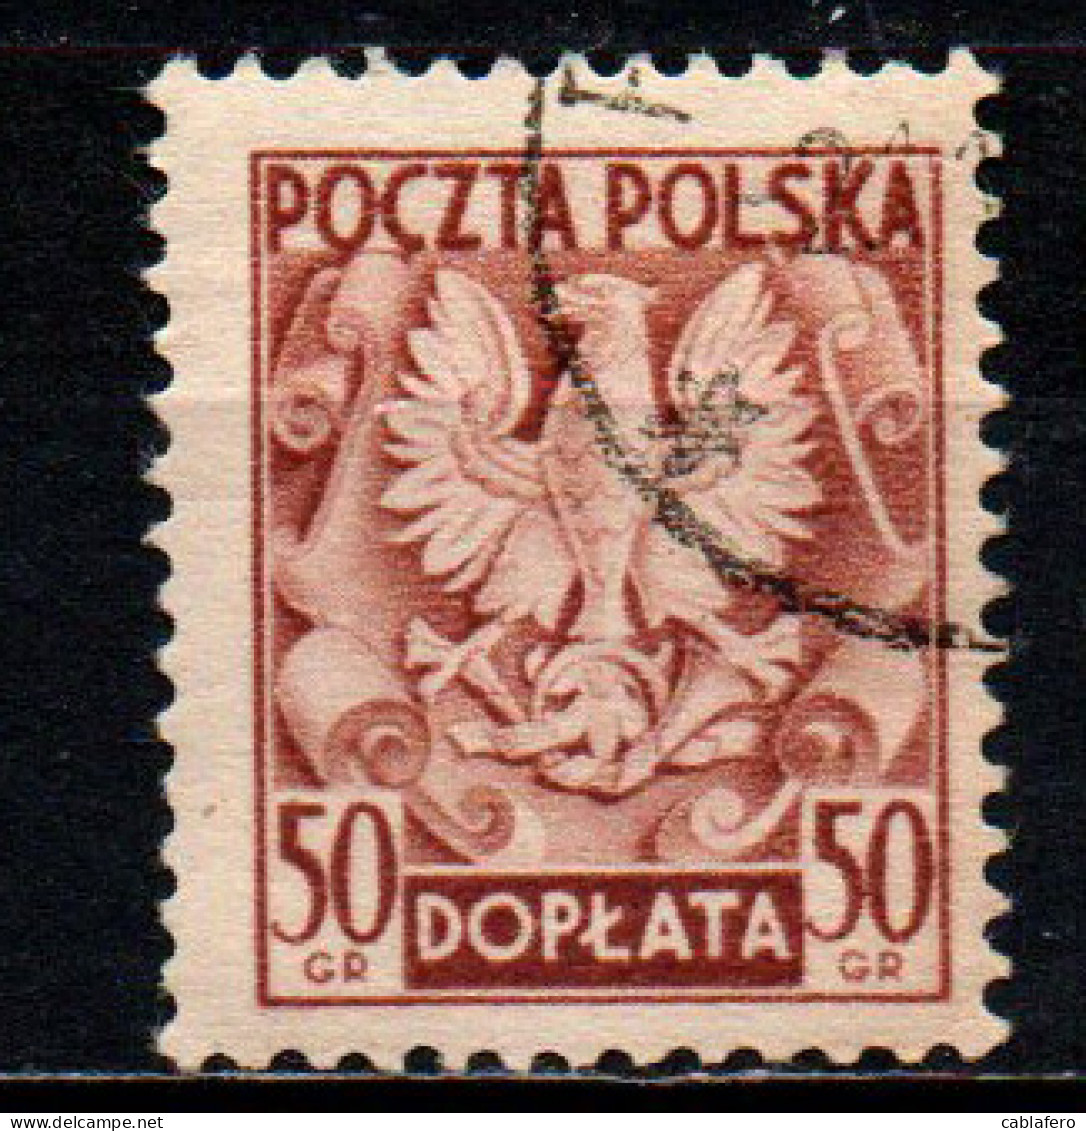 POLONIA - 1950 - Polish Eagle - USATO - Impuestos